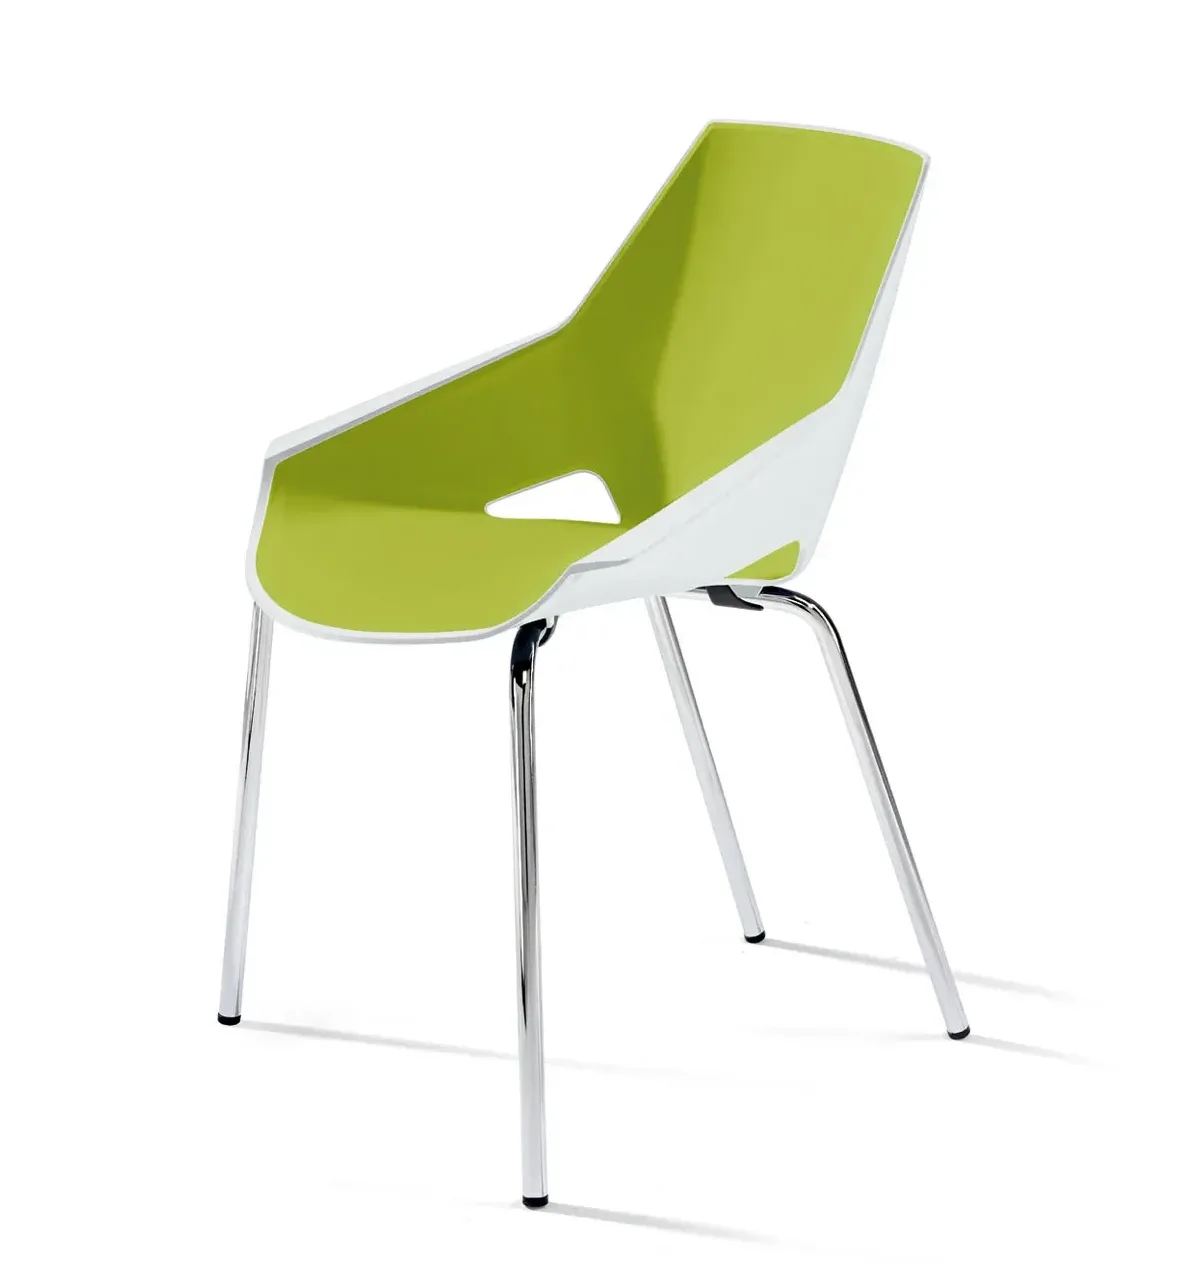 Actiu Viva Chair in Green colour